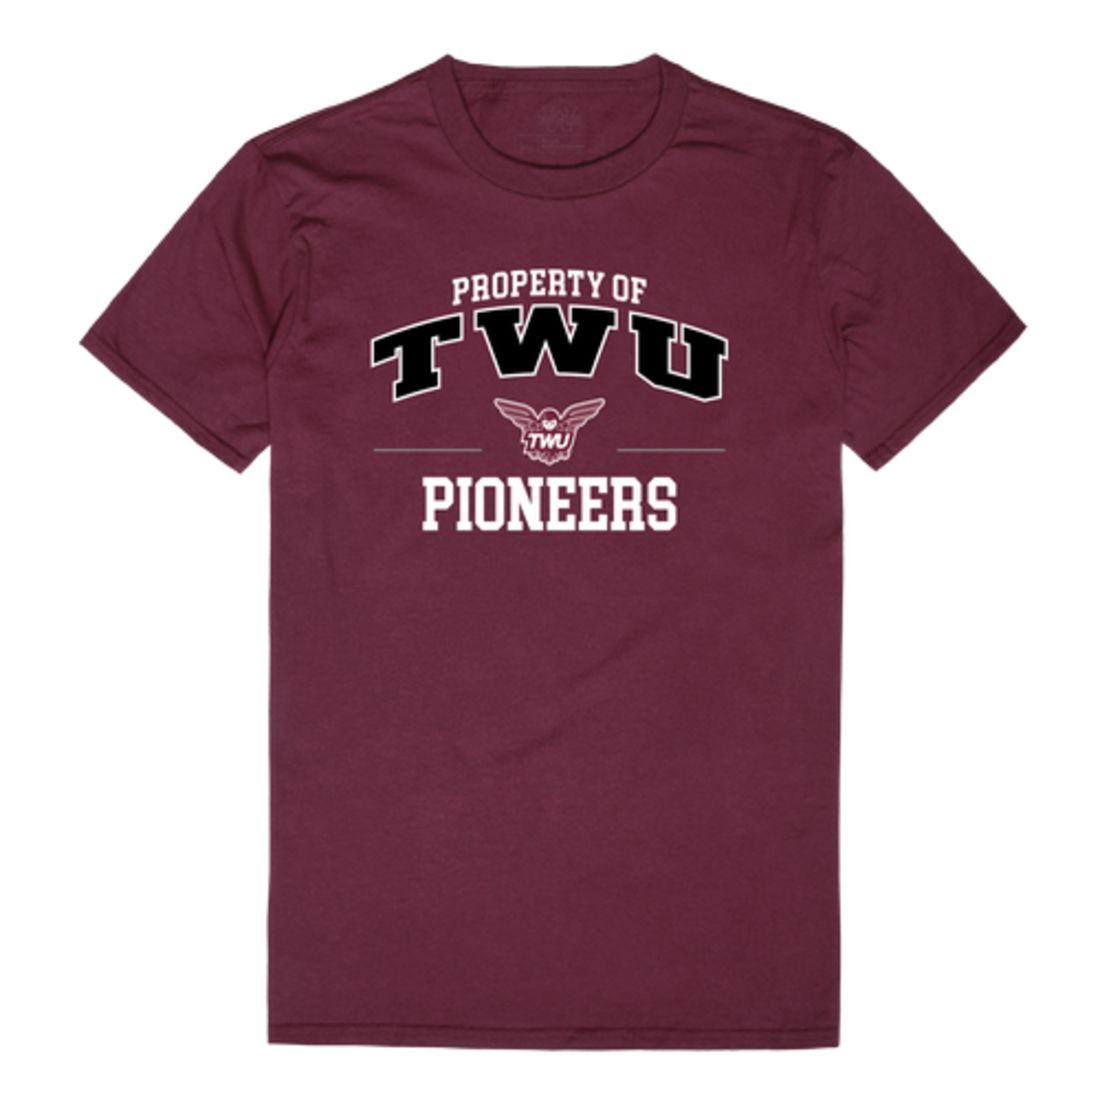 Texas Woman's University Pioneers Property T-Shirt